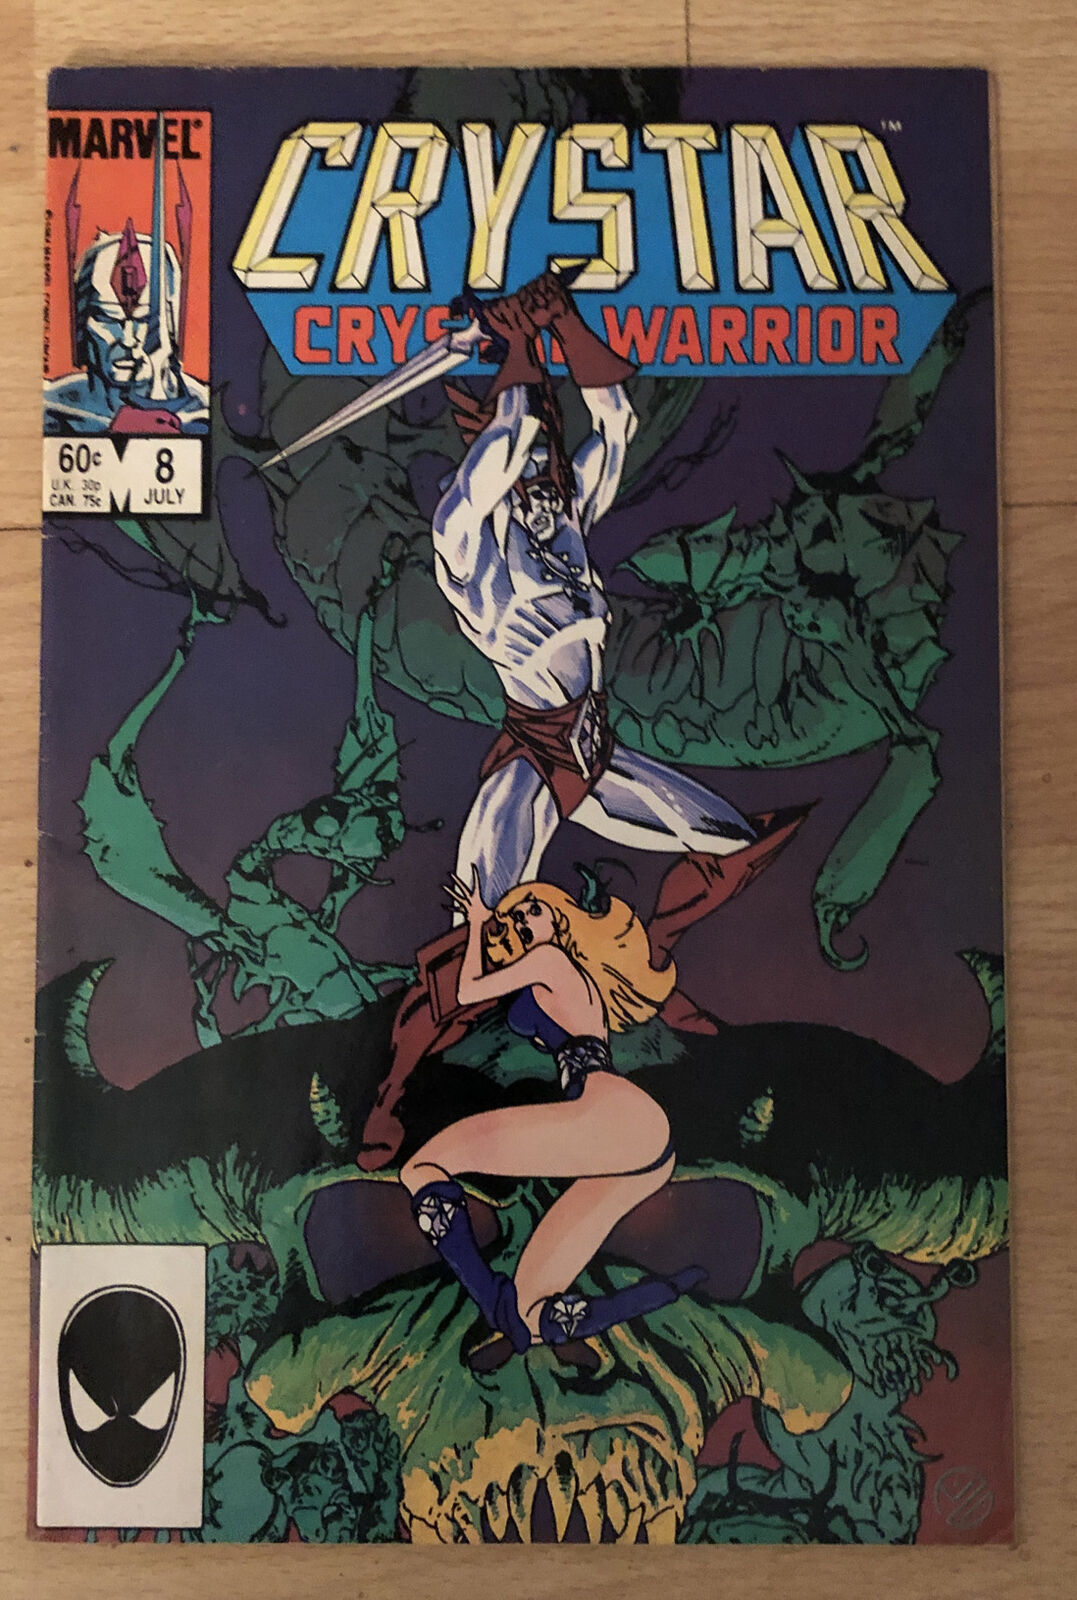 Crystar Crystal Warrior #8 Golden Cover Art; Danzig Samhain Logo; Atari MOTU Ad